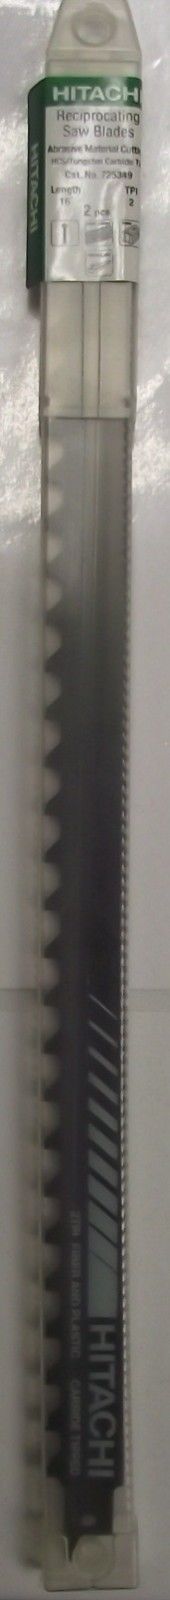 Hitachi 725349 16 Inch Abrasive Material Carbide Tip Recip Saw Blades 2Pack